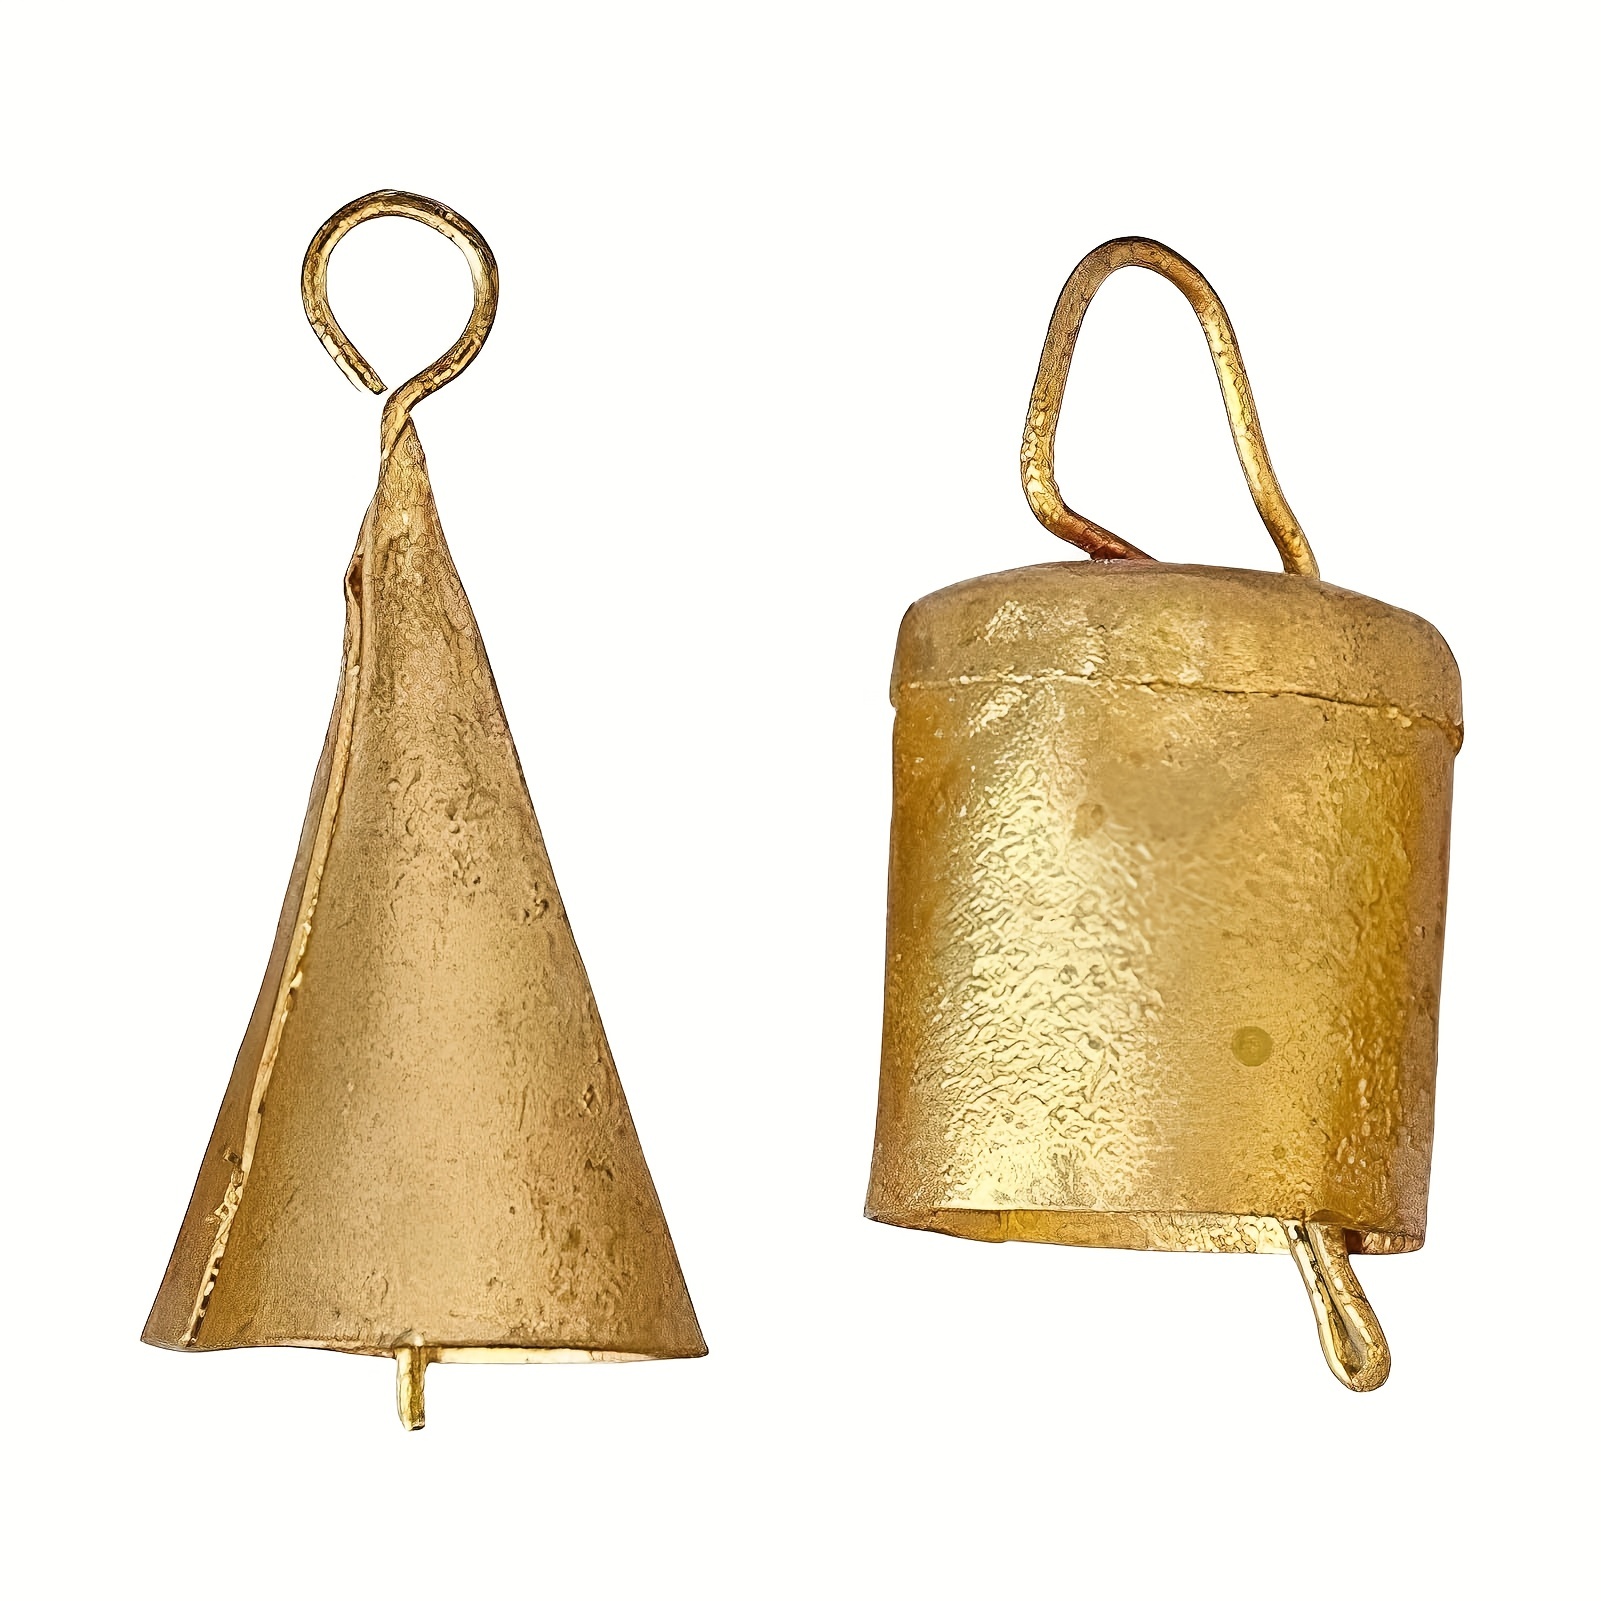 Craft Bells,20Pcs Jingle Bells Brass Bells for Crafts with Spring Hooks Hanging